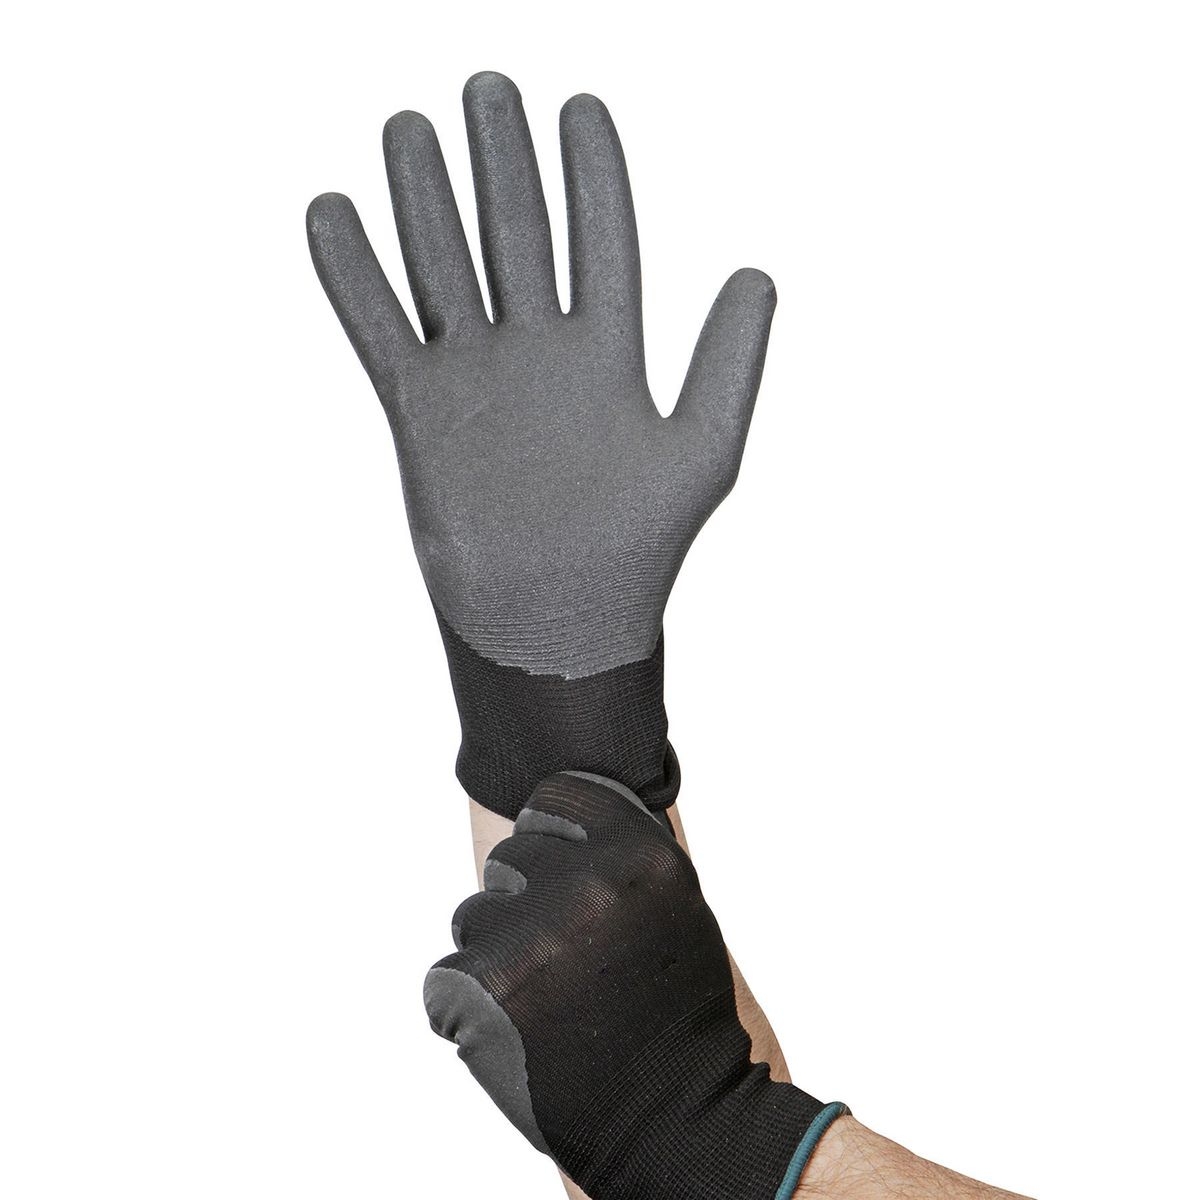 Coupons for HARDY Polyurethane Coated Nylon Work Gloves X-Large for $1.49